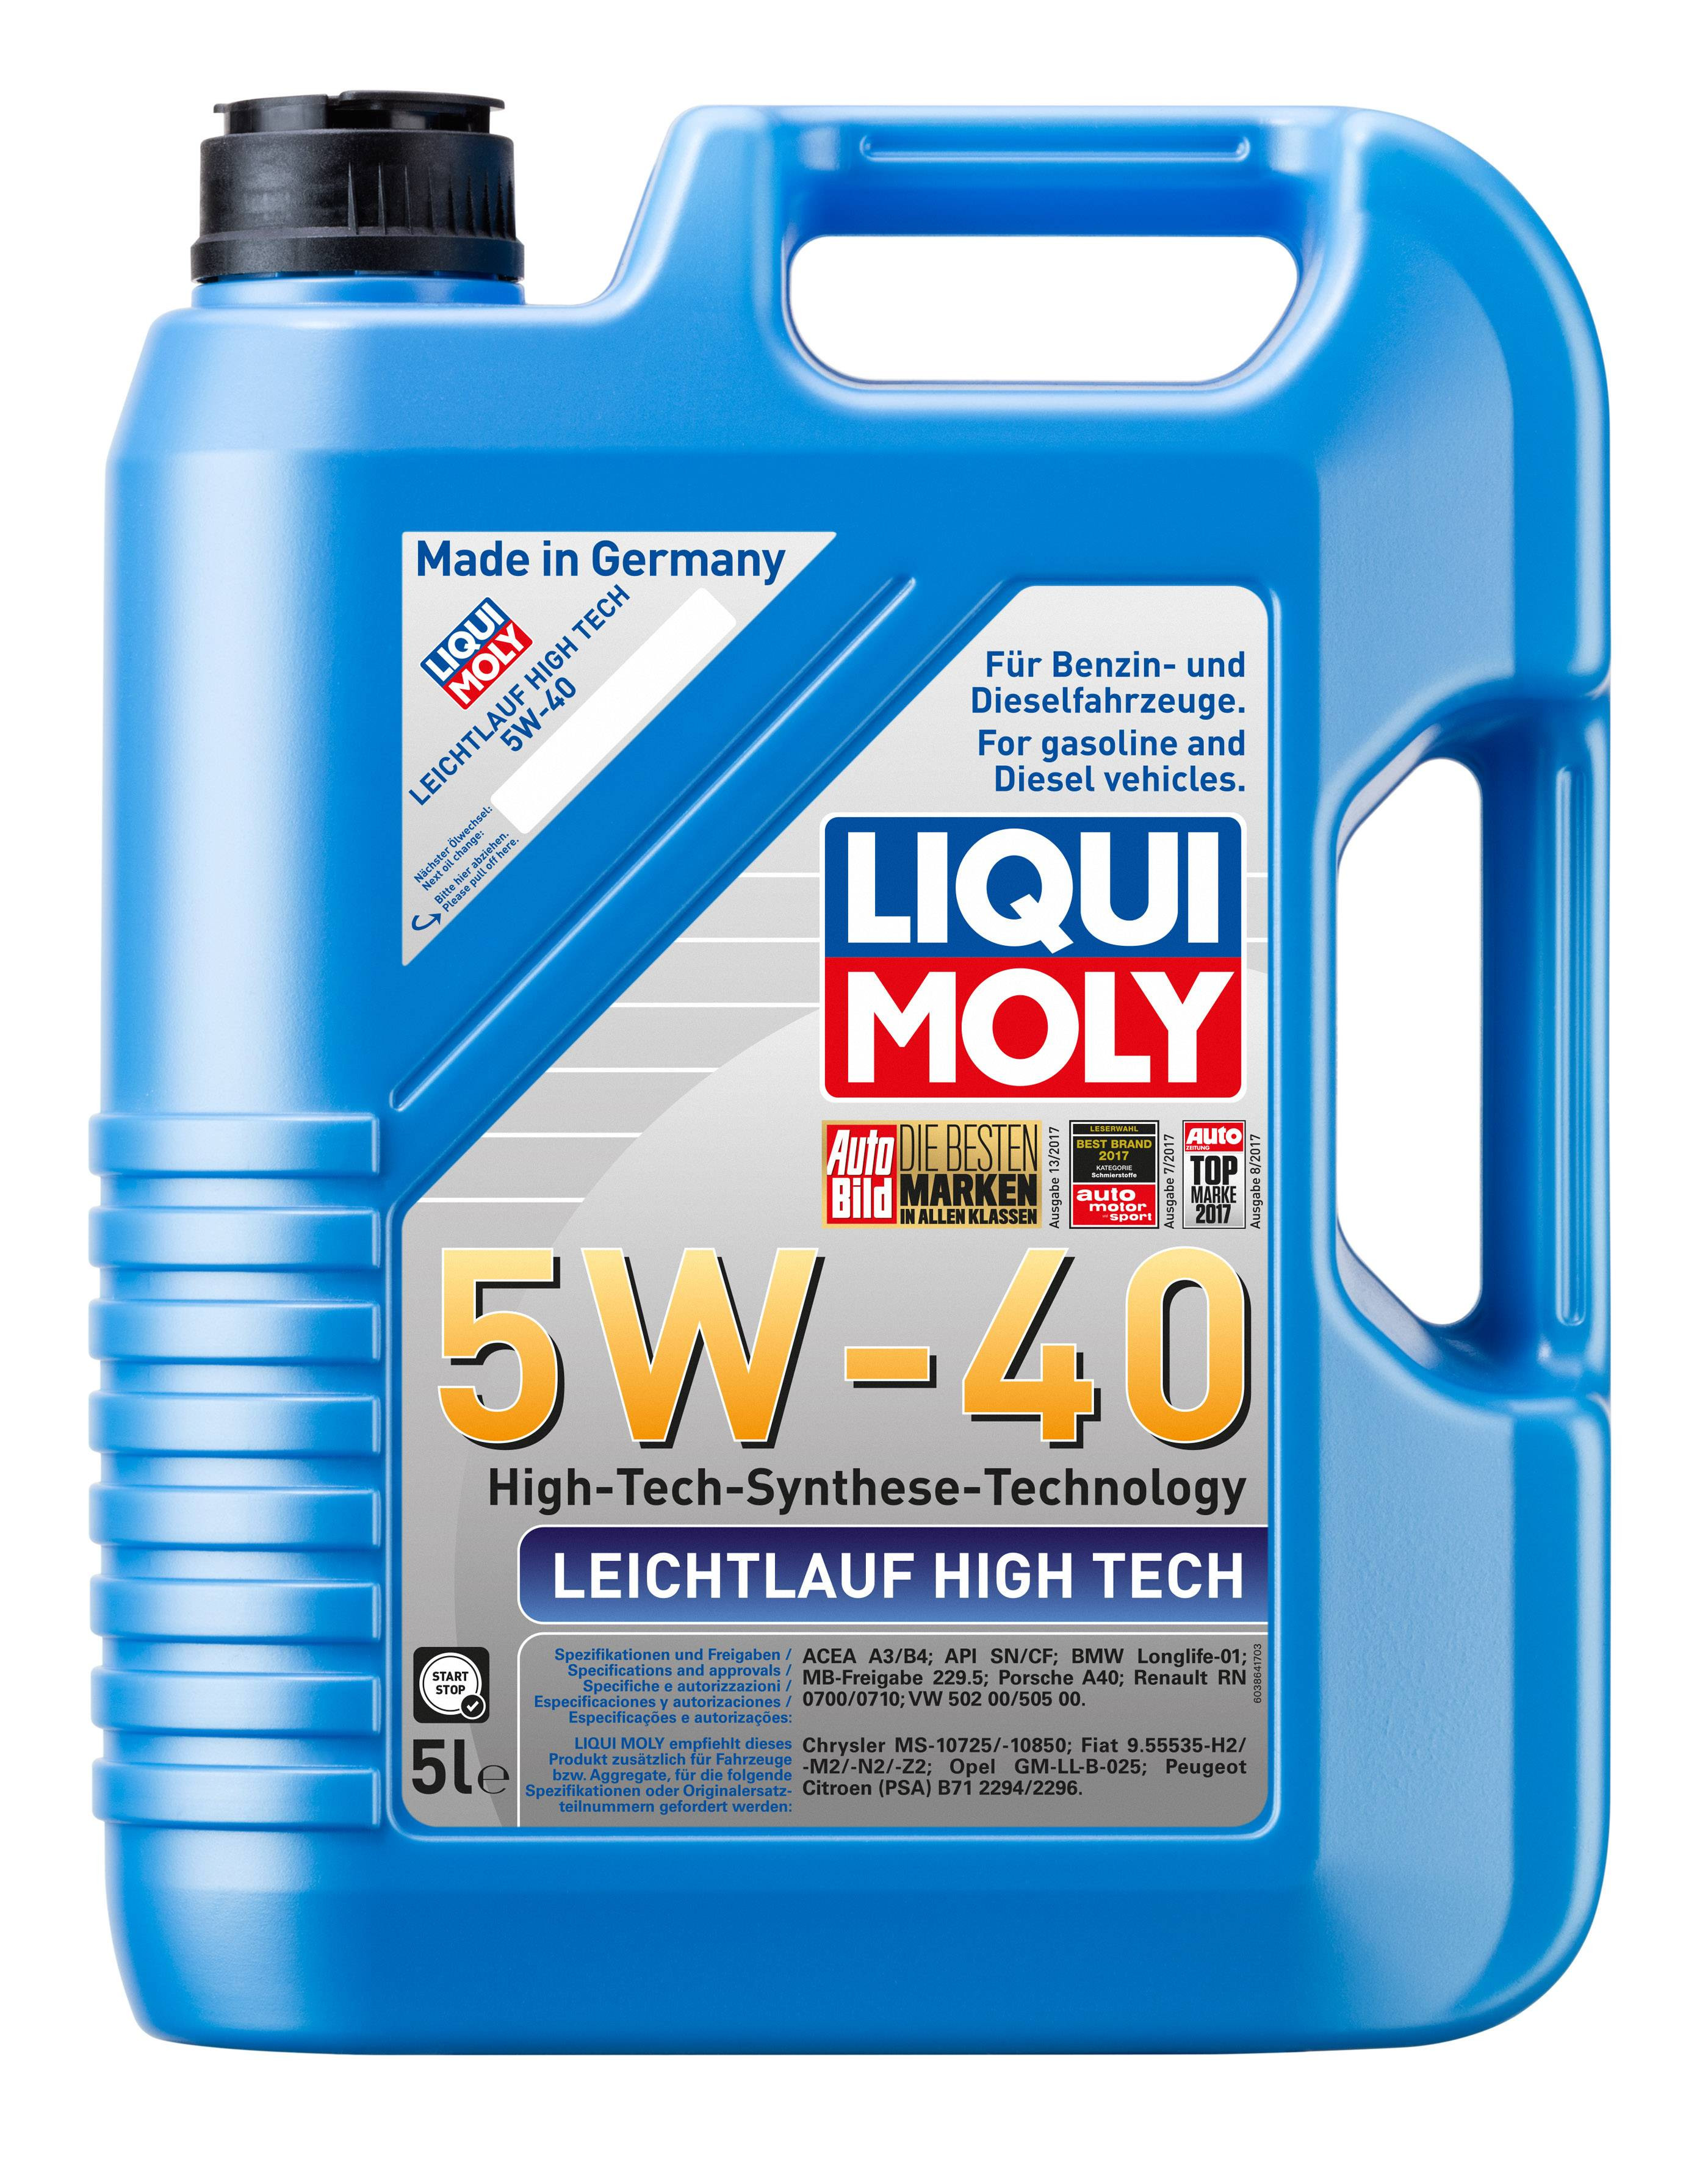 НС-синтетическое моторное масло Liqui Moly Leichtlauf High Tech 5W-40 5л